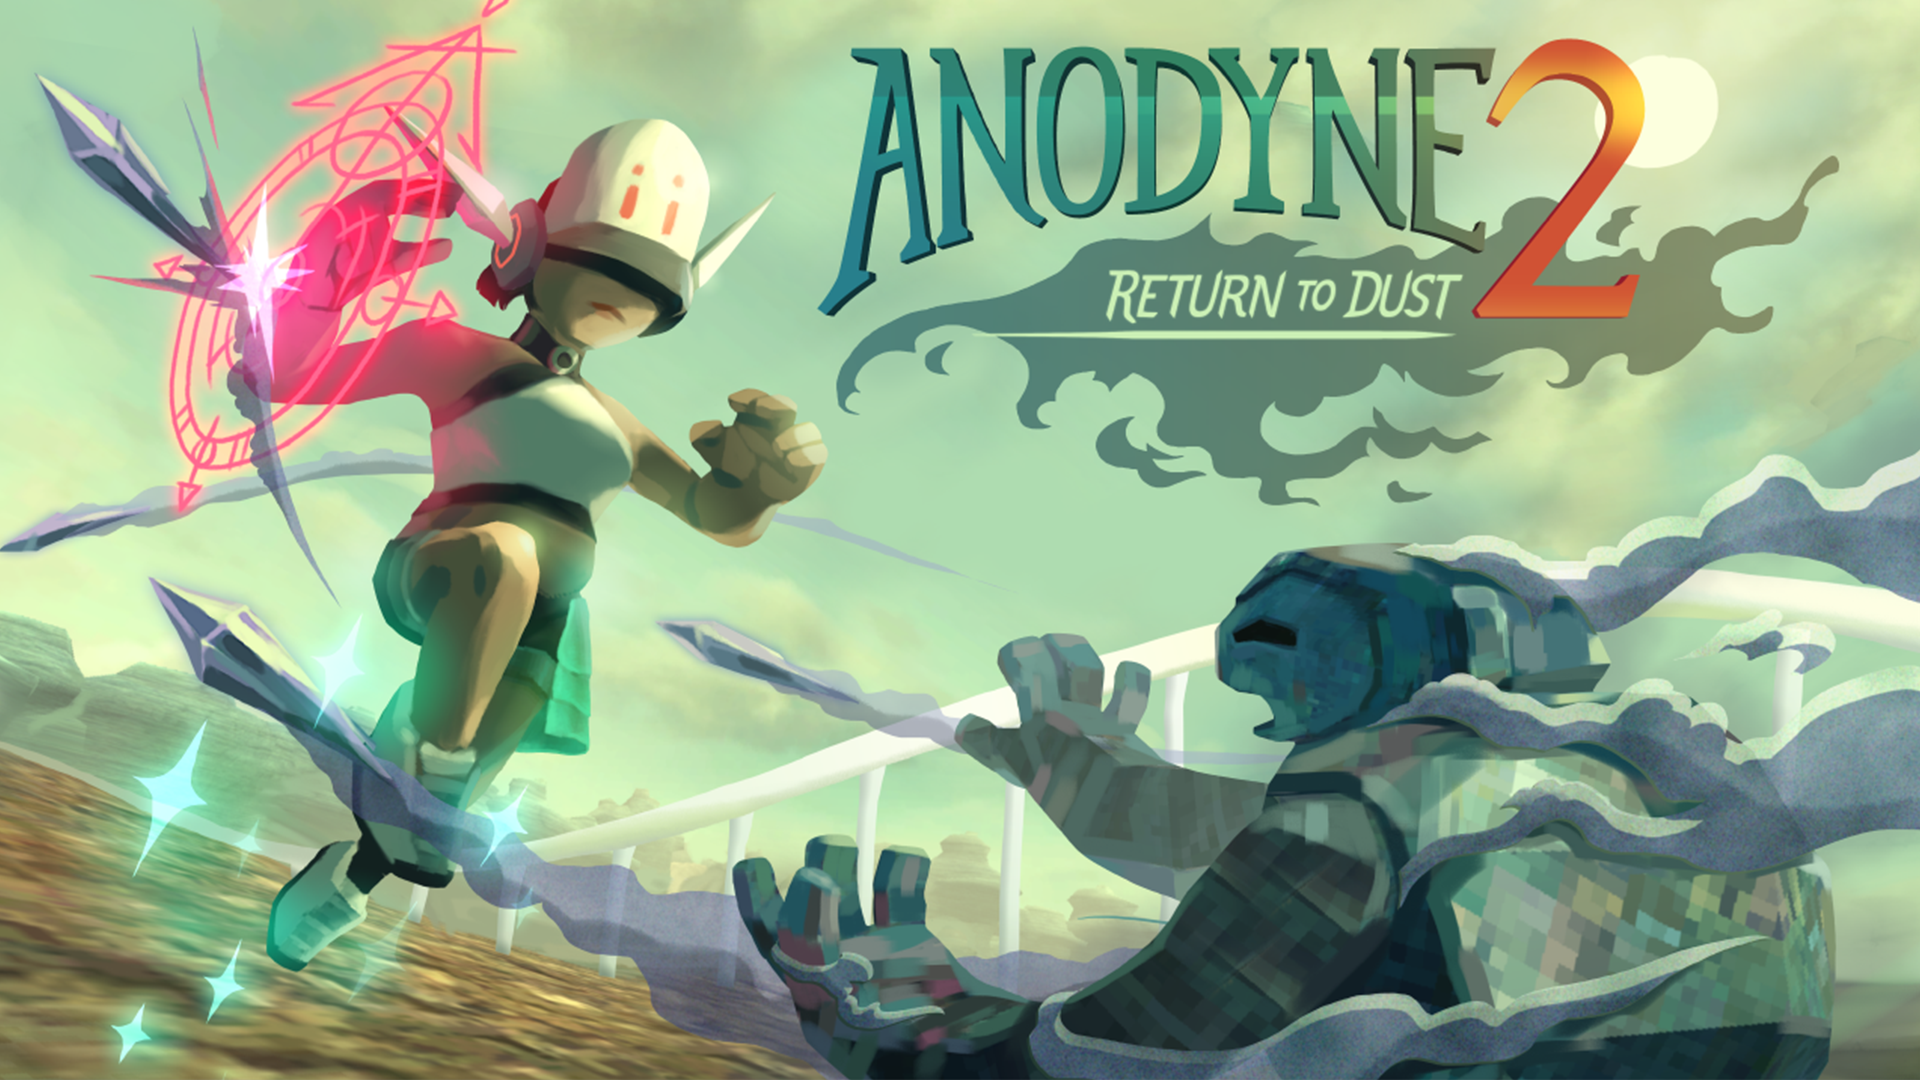 Anodyne 2: Return to Dust Releases On February 18